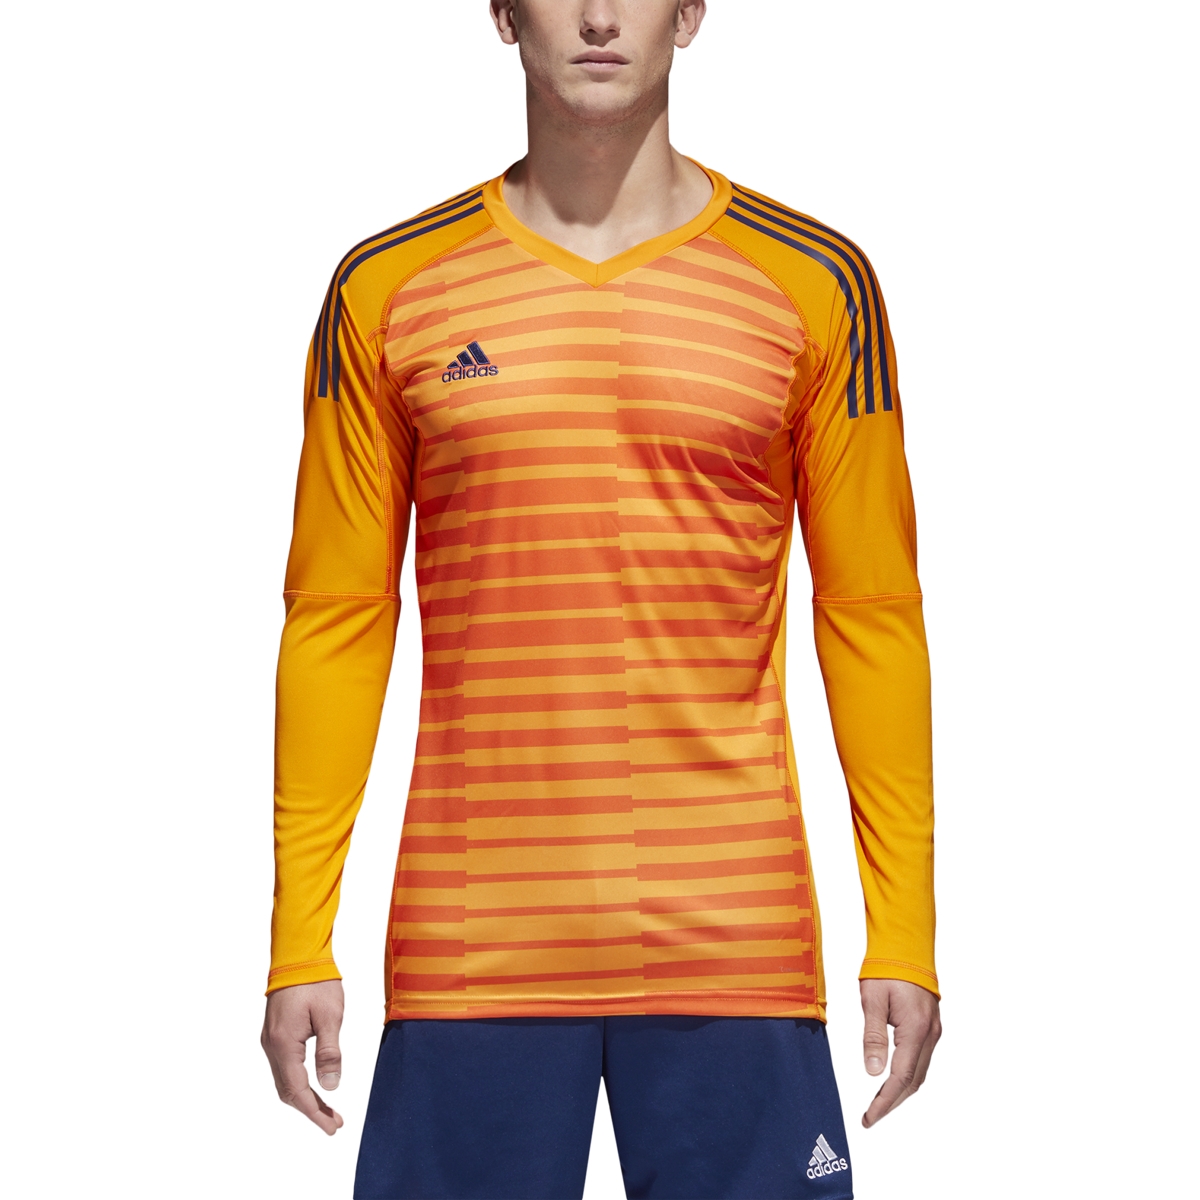 Adidas AdiPro Goalkeeper Long Sleeves Jersey - Soccer Premier